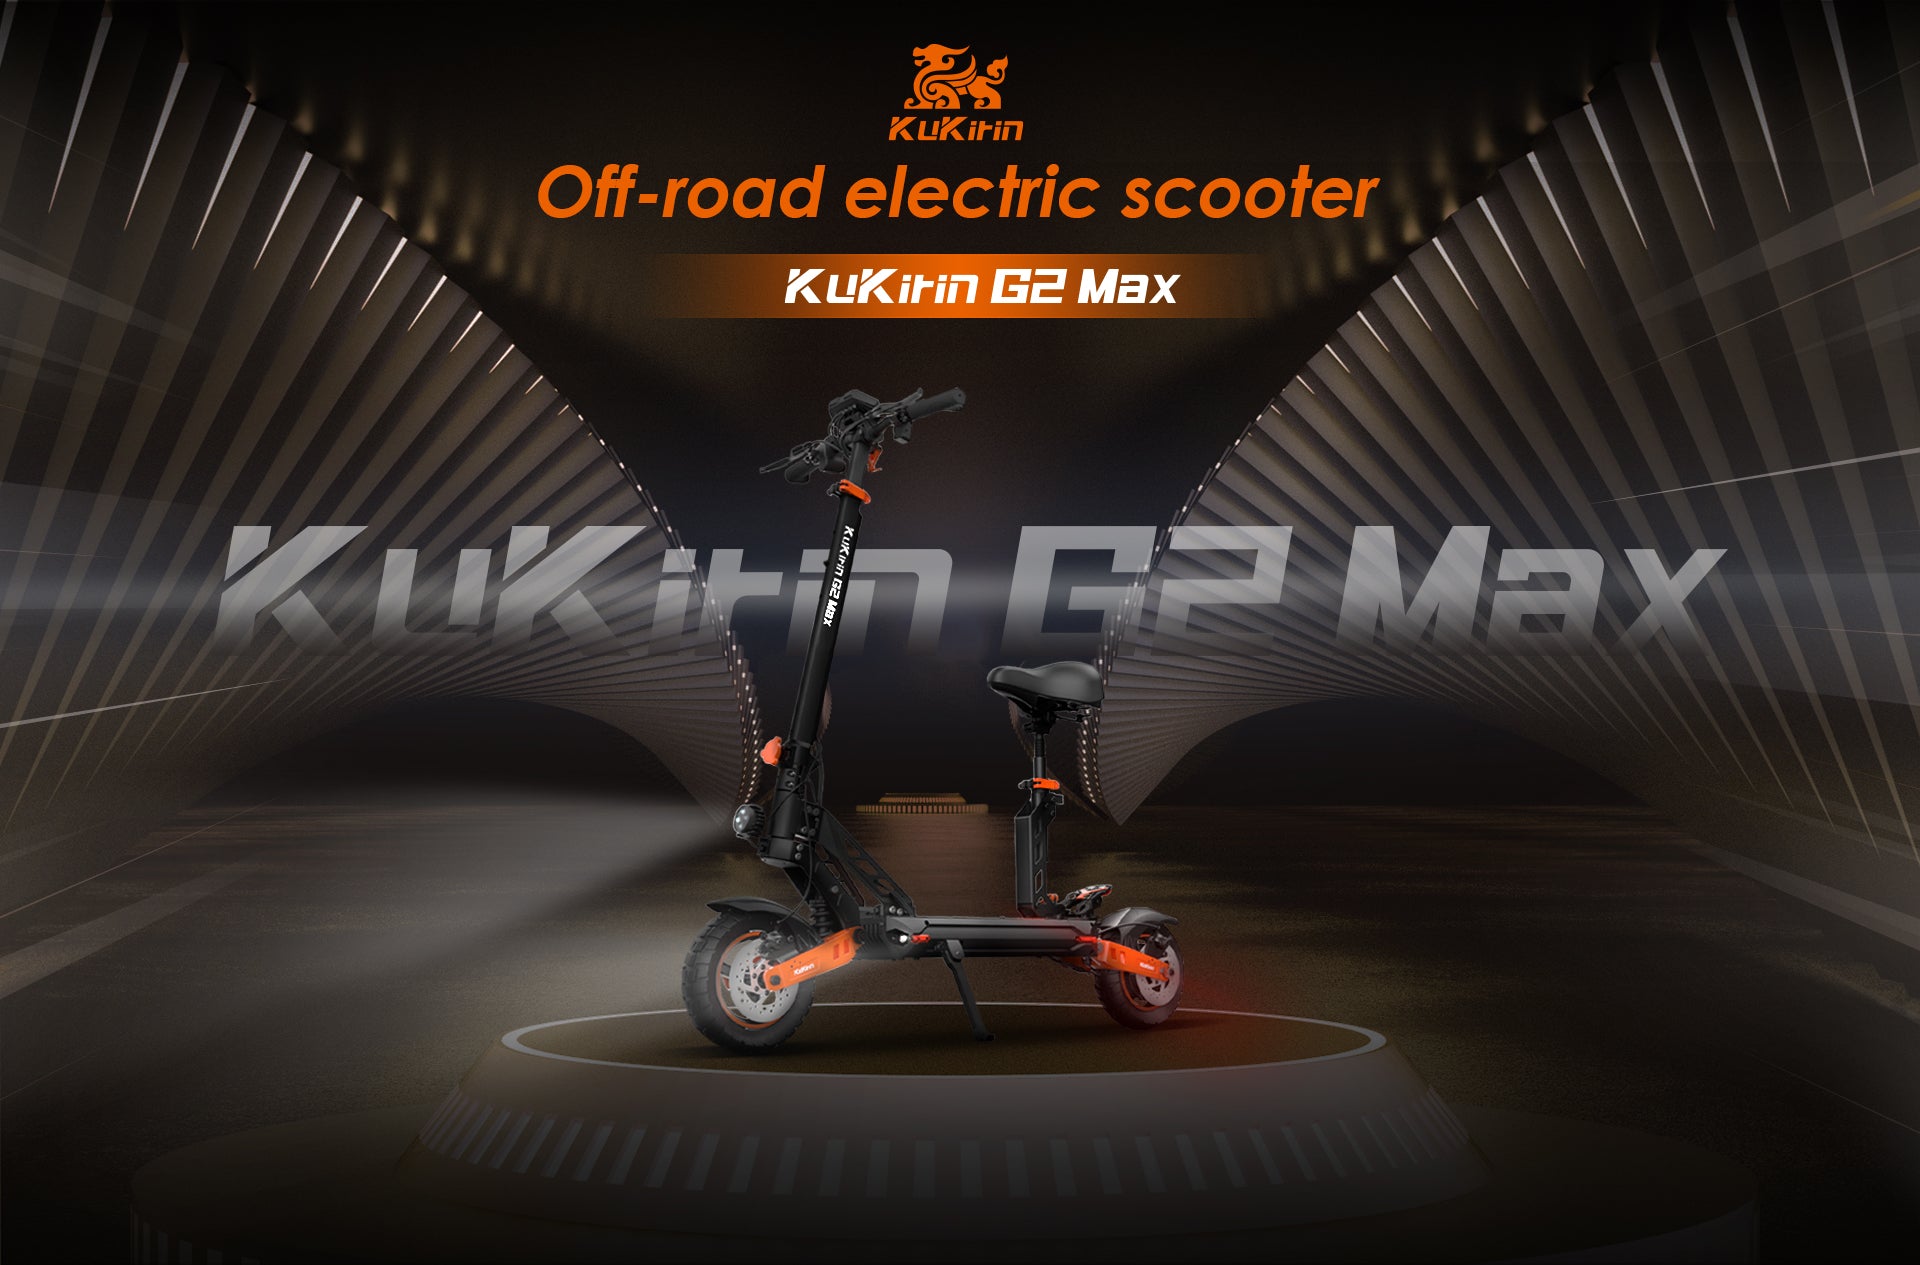 Kukirin-patinete eléctrico G2 MAX 2023, potente movilidad China